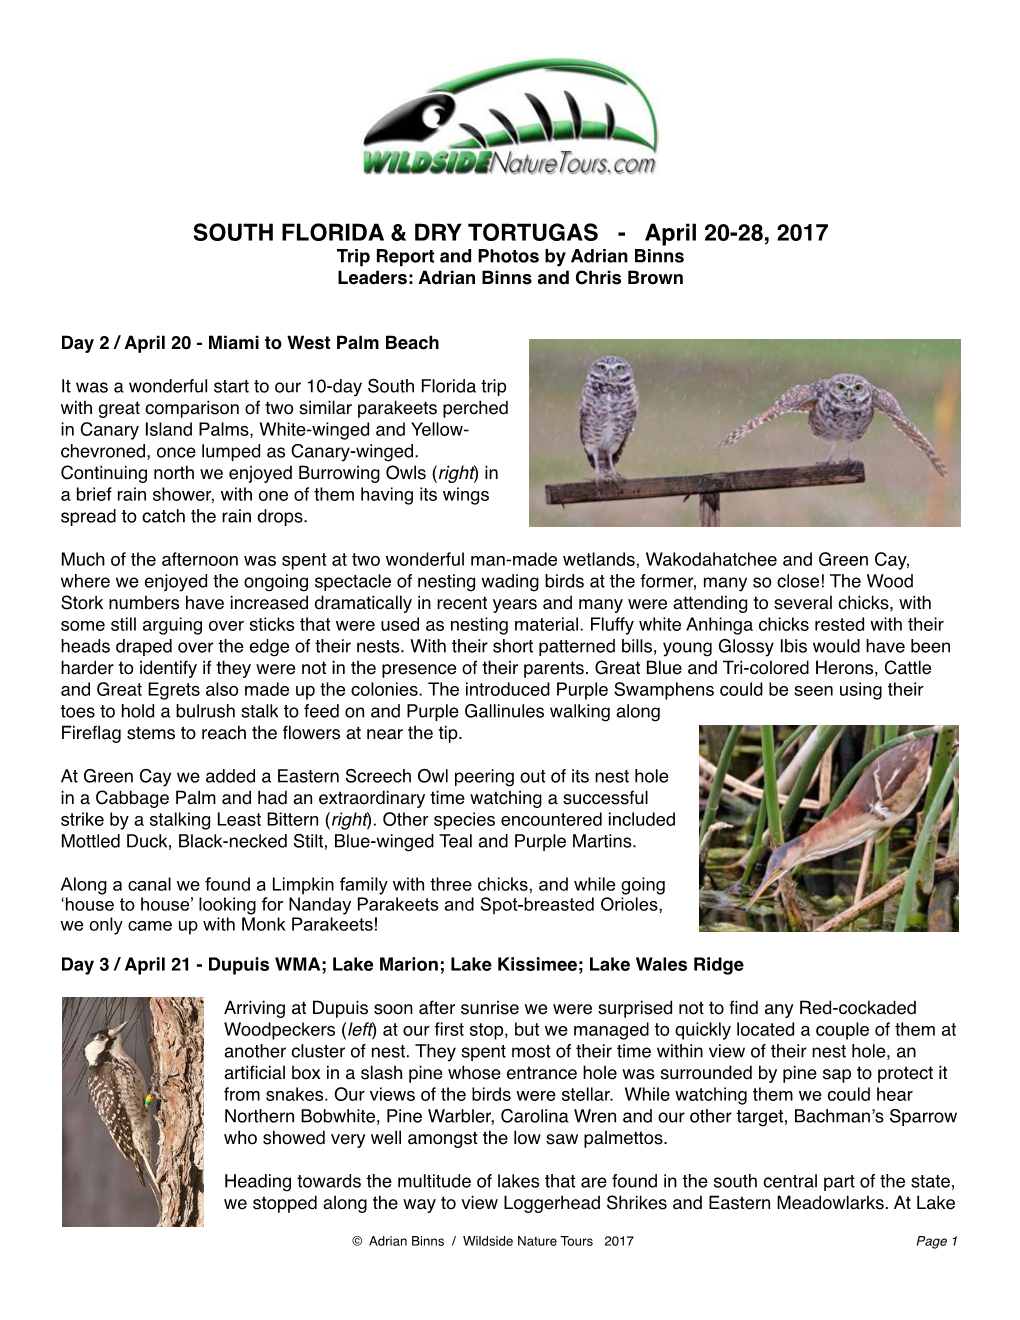 TRIP REPORT Florida April 20-28, 2017